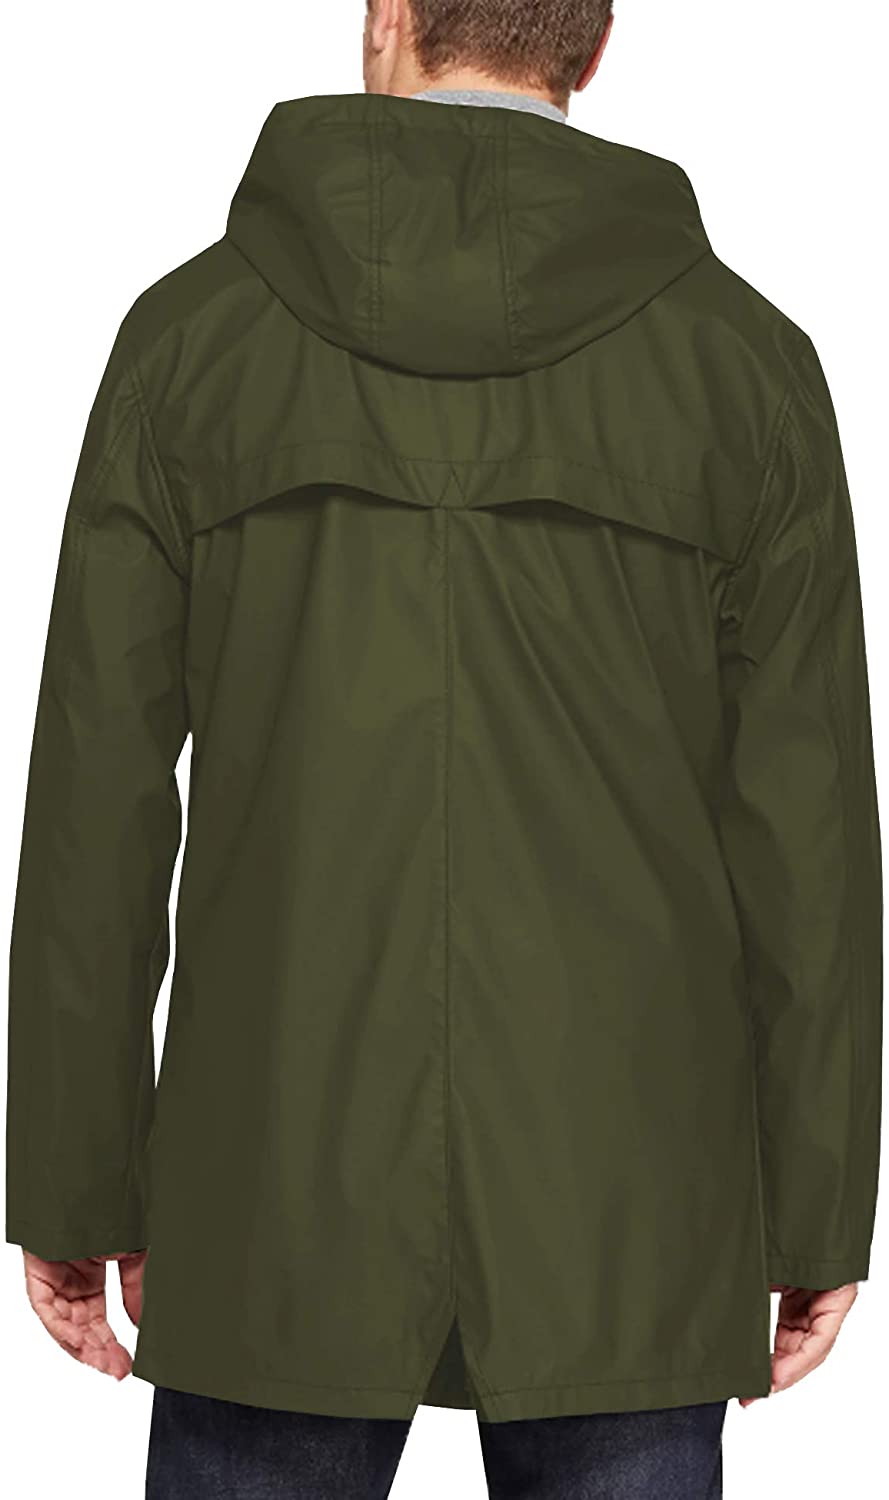 JINIDU Men's Packable Rain Jacket Waterproof Lightweight Rain Coat With Hooded Outdoor Travel Cycling Raincoat 